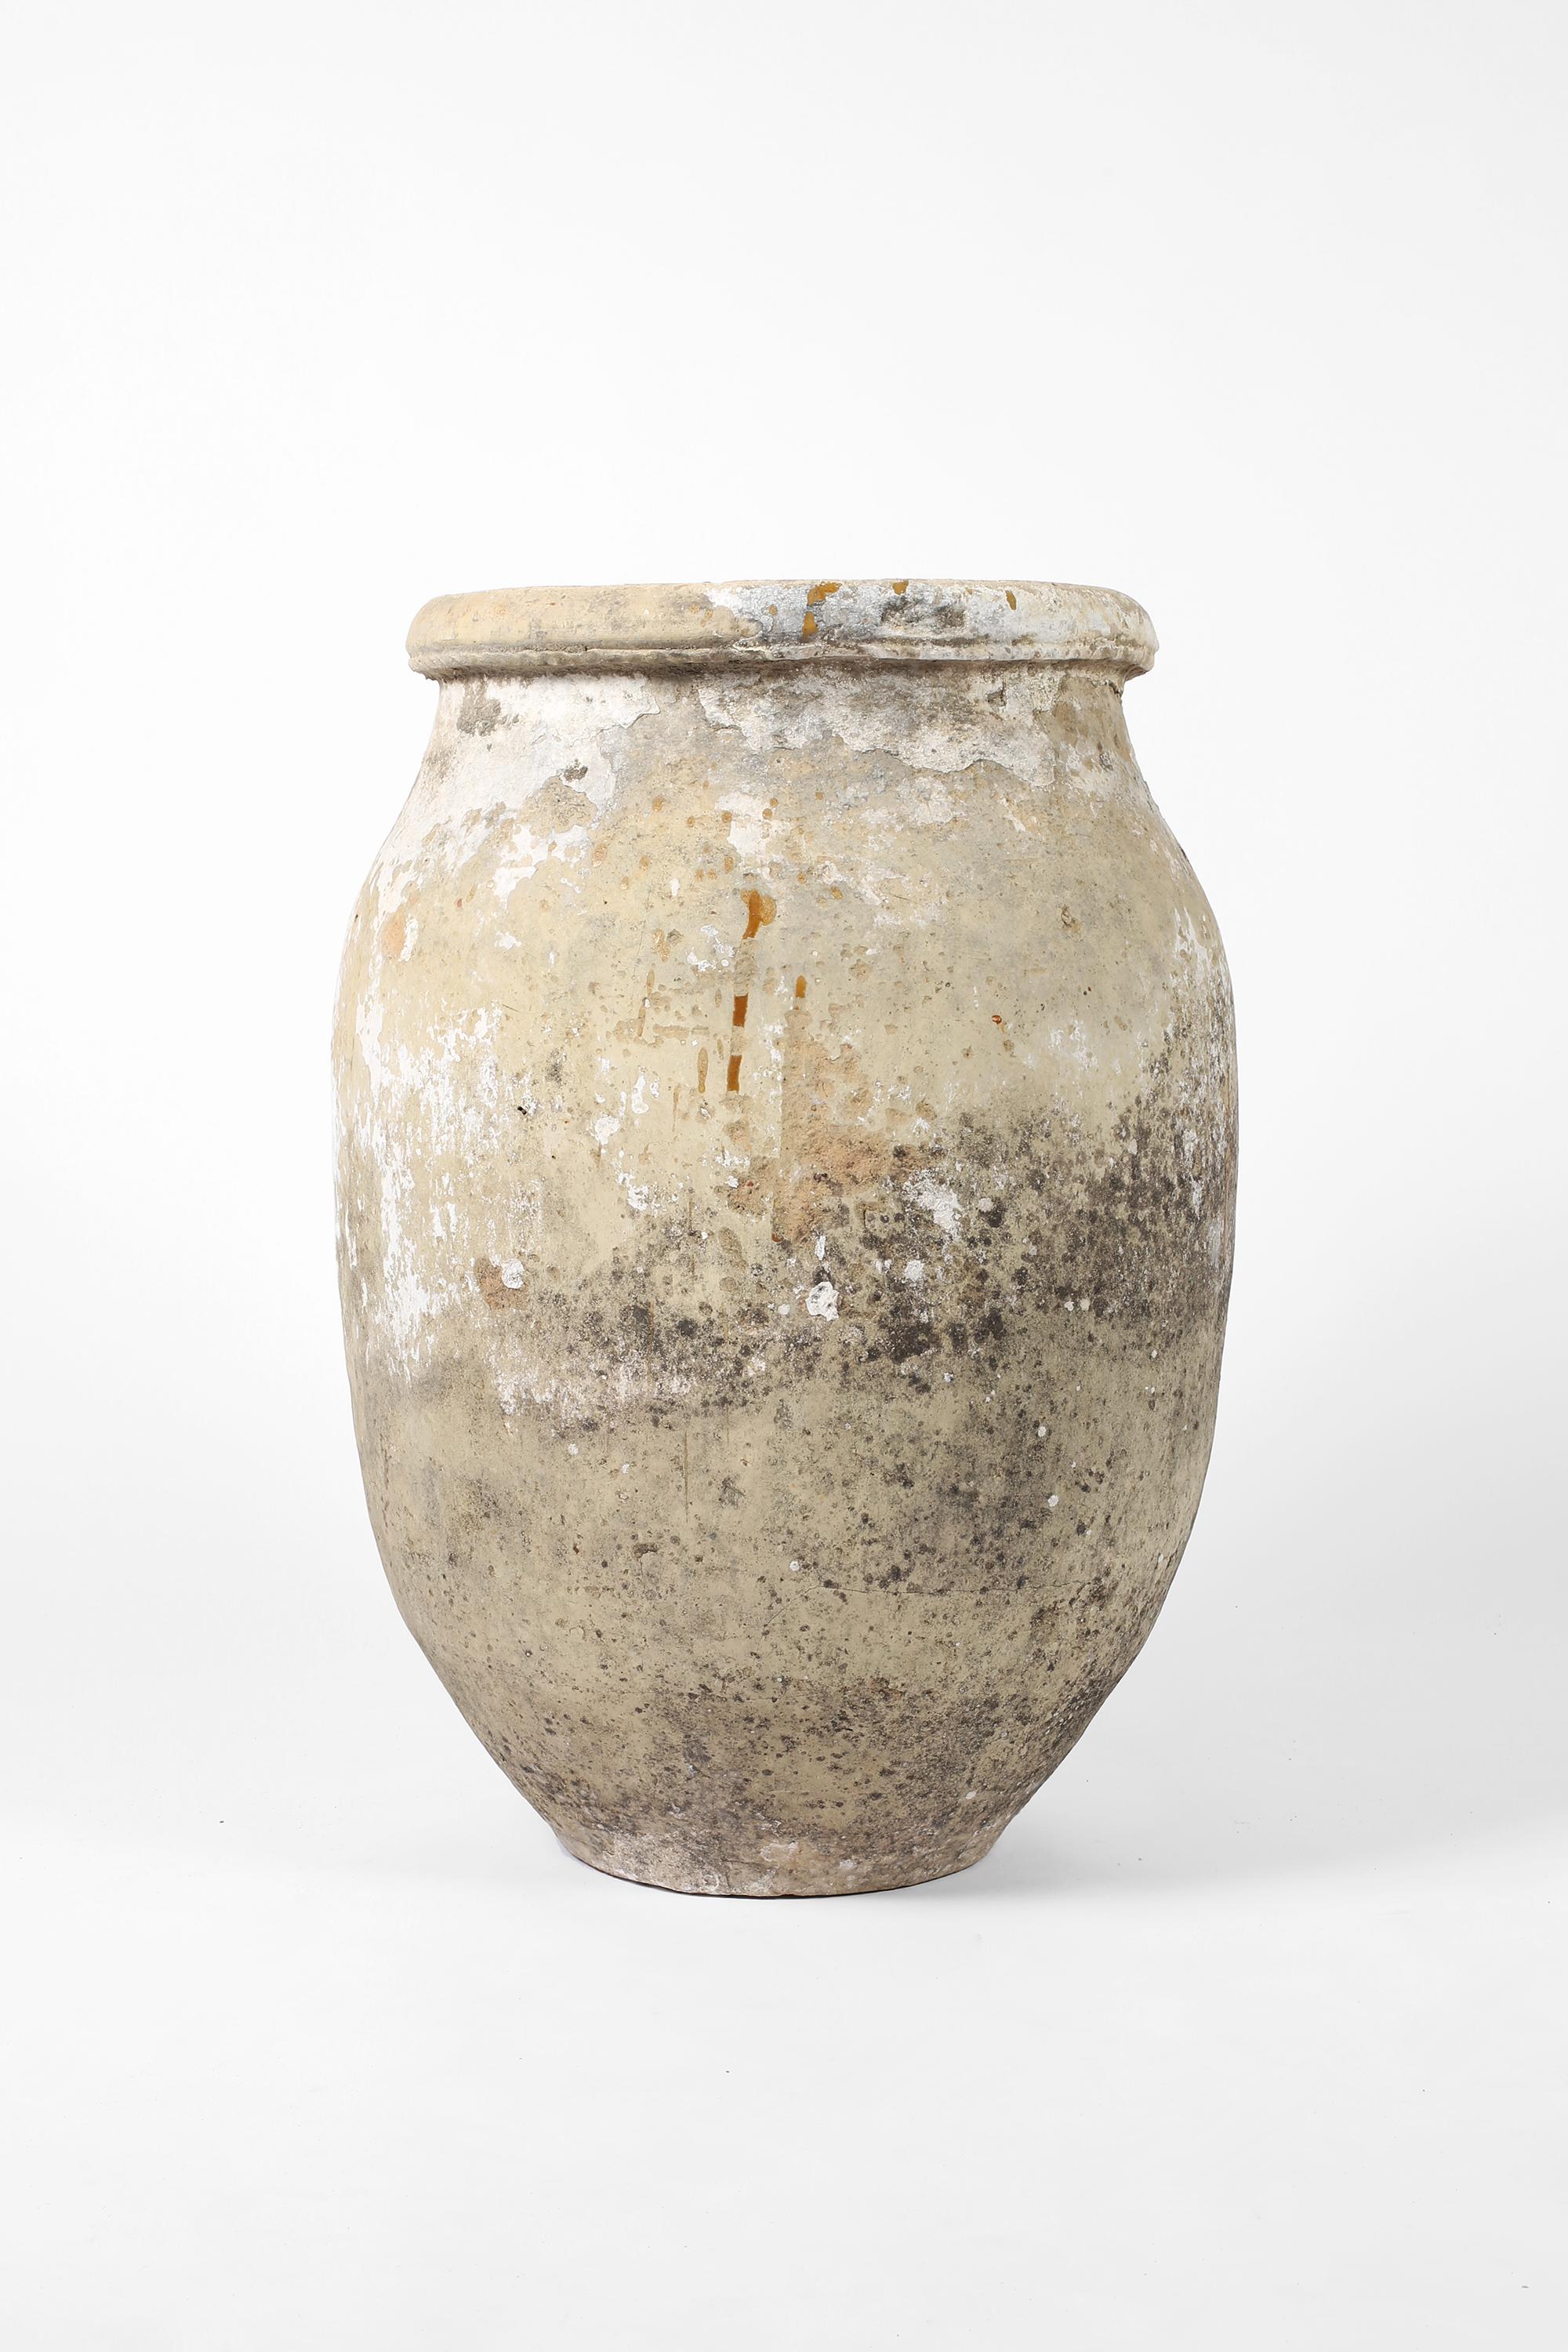 Large Stapled Southern Earthenware Wabi-Sabi Spanish Jar c. 1800 6